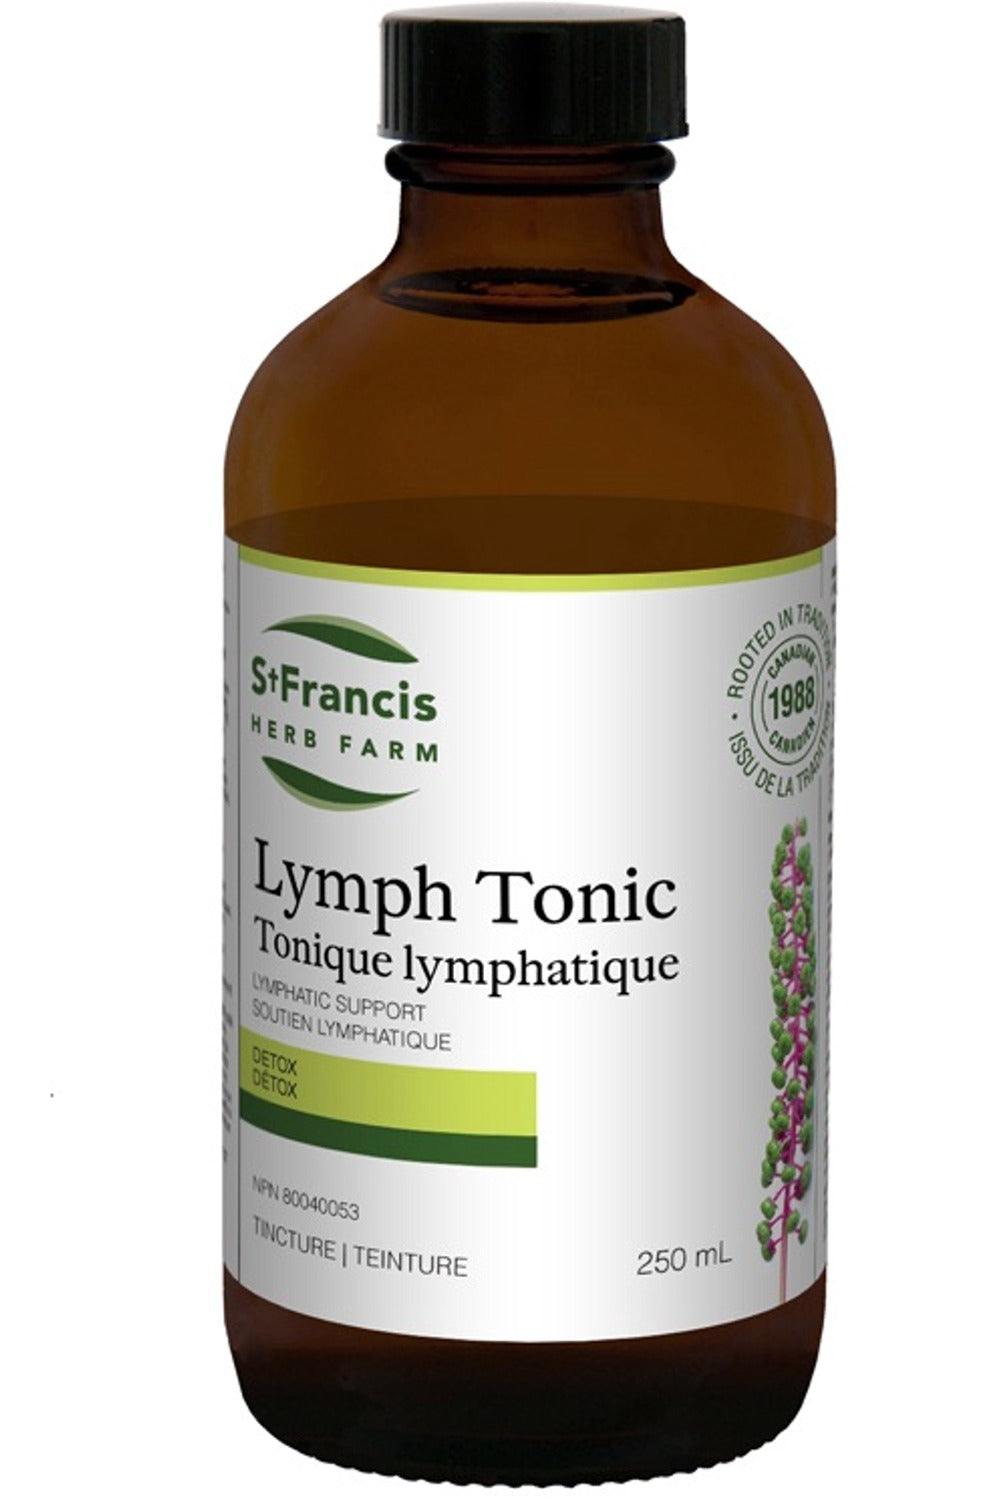 ST FRANCIS HERB FARM Lymph Tonic (250 ml)